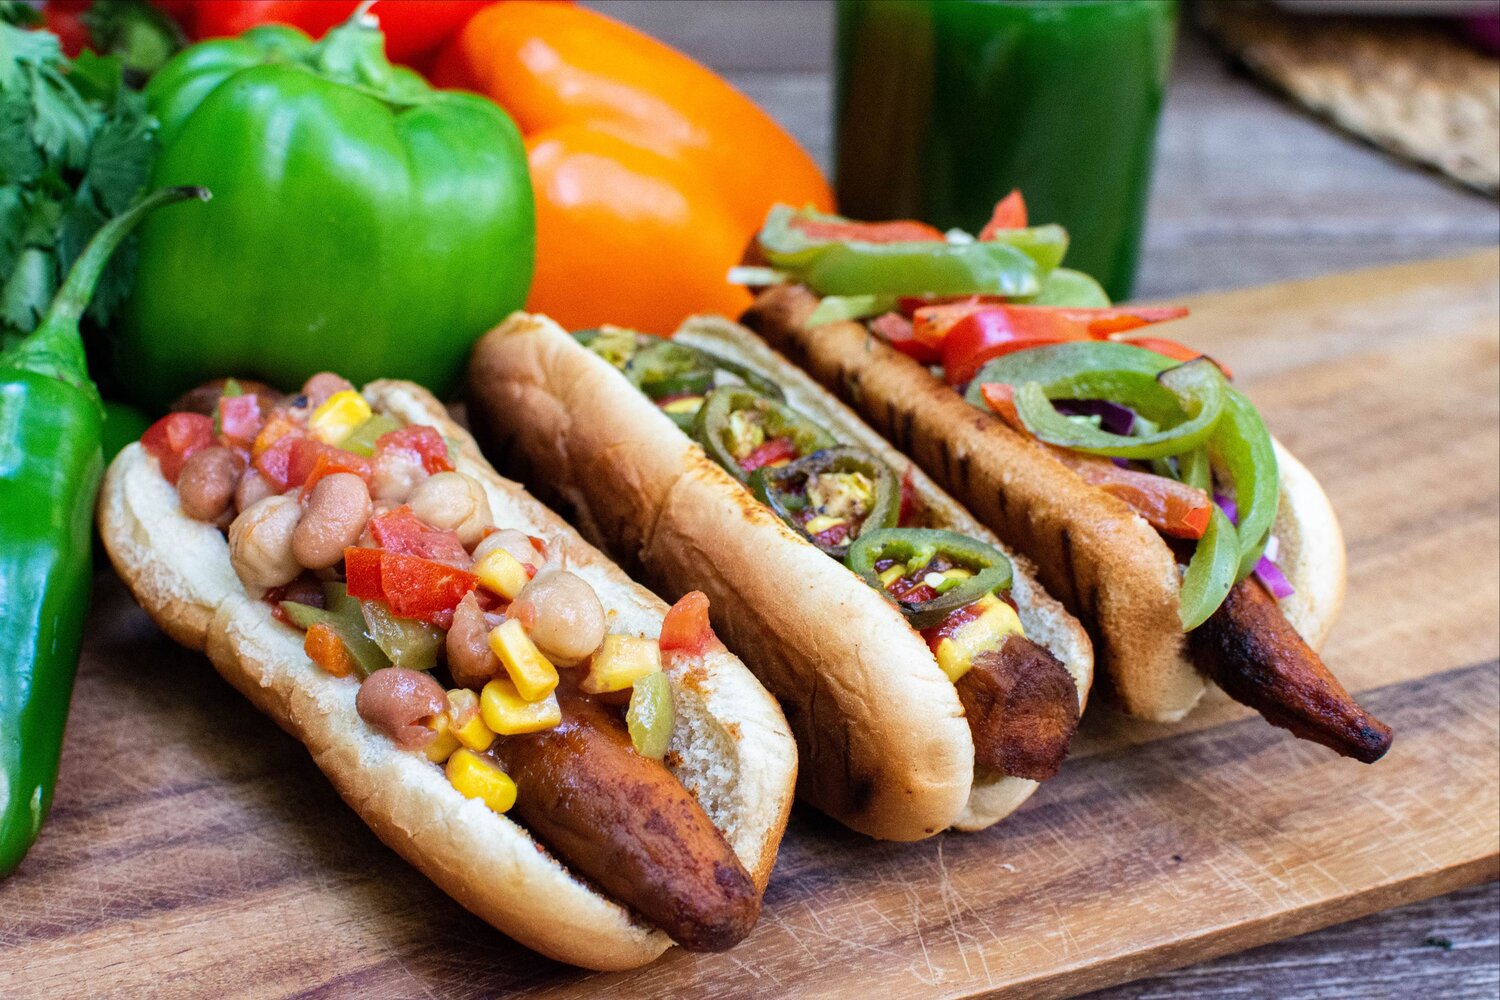 Vegan hot dogs from Másaya